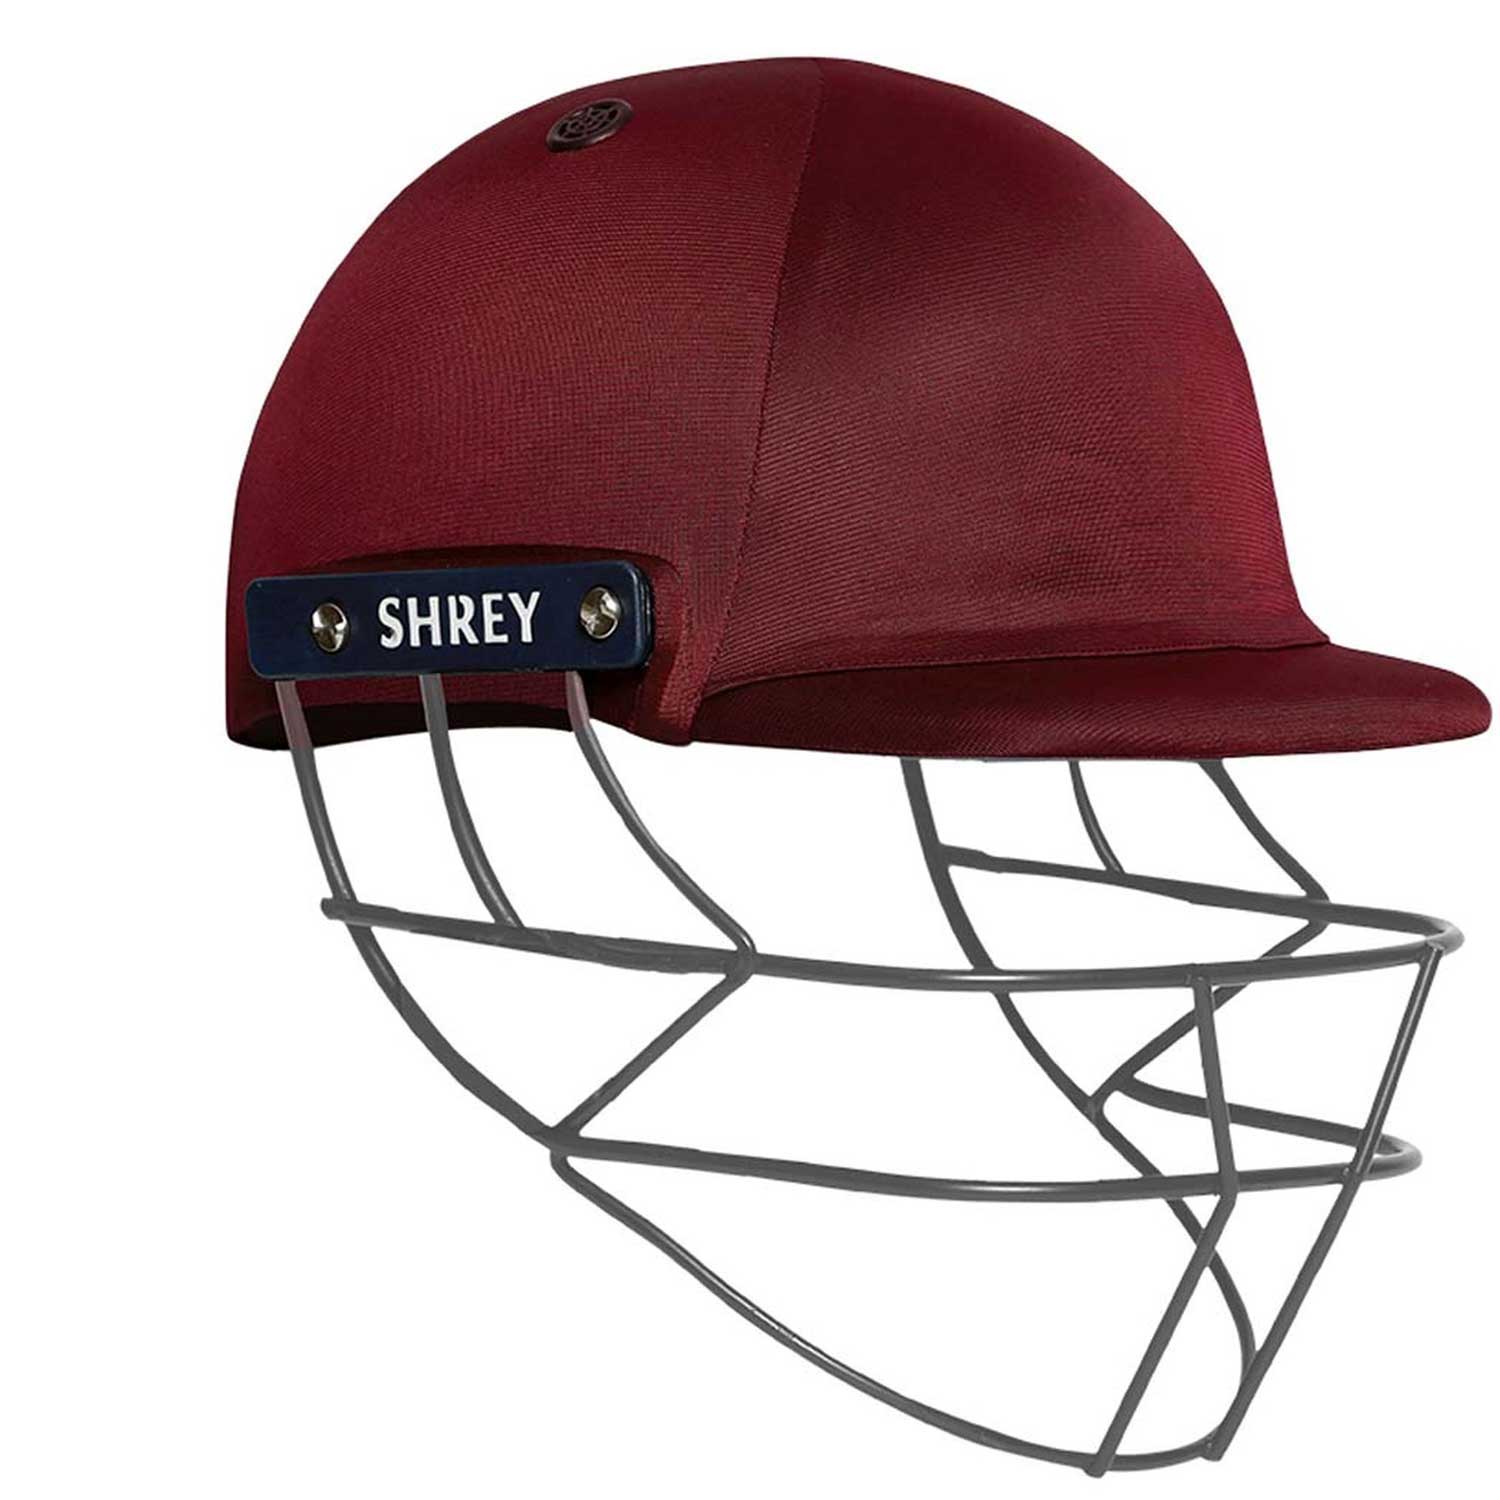 Shrey Performance 2.0 Youths/Junior Cricket Helmet